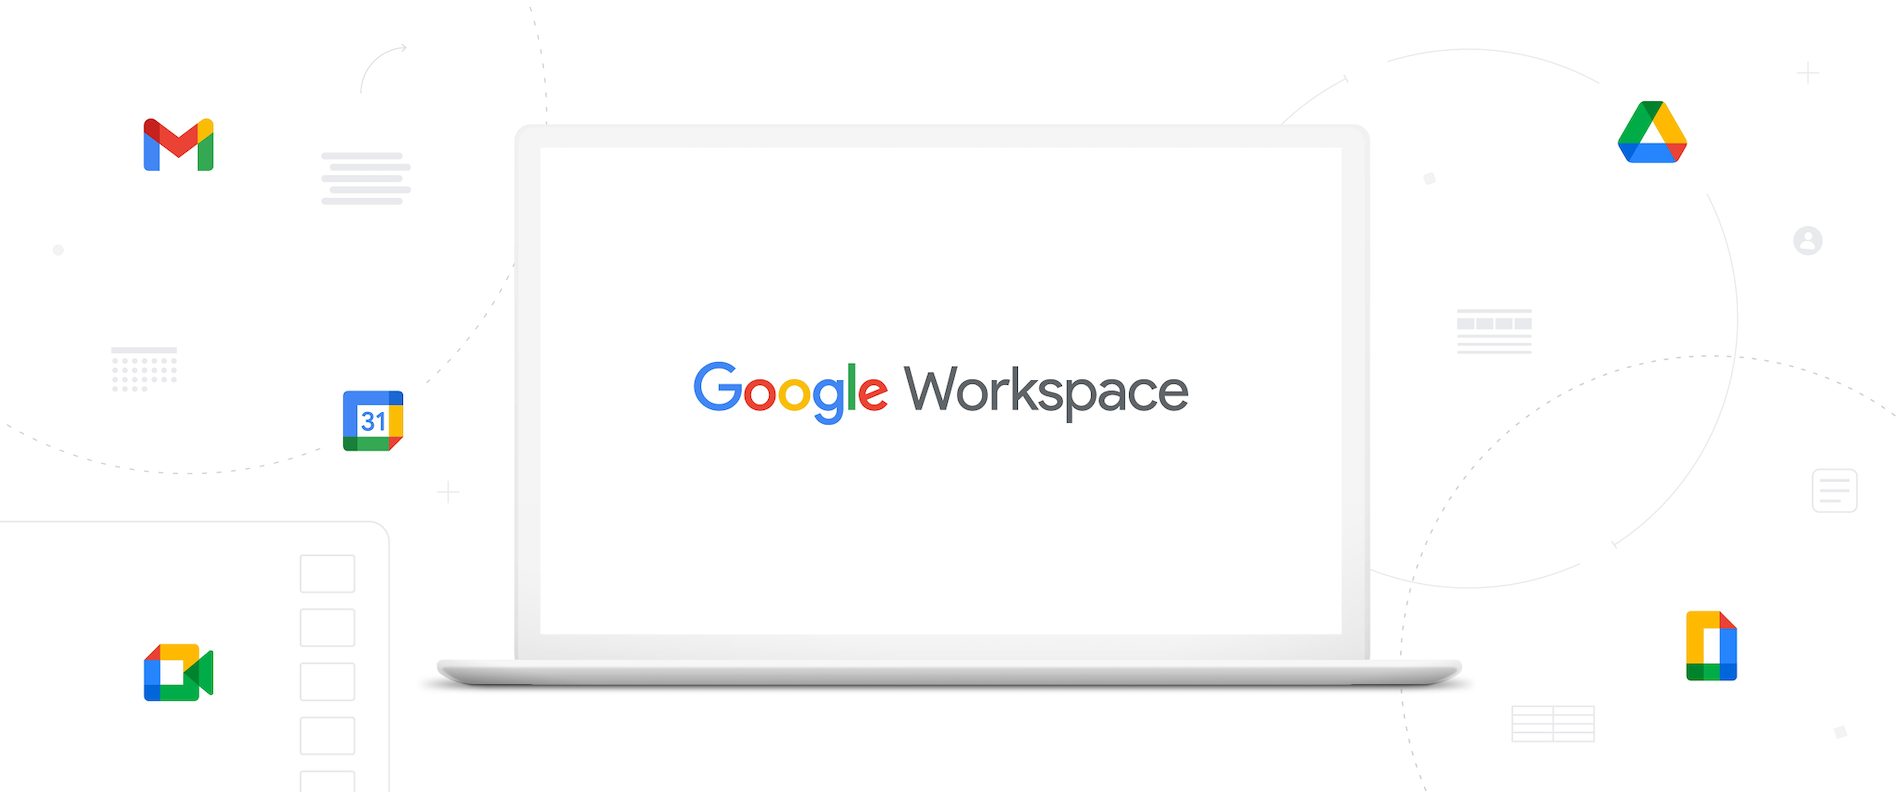 G Suite on nyt Google Workspace